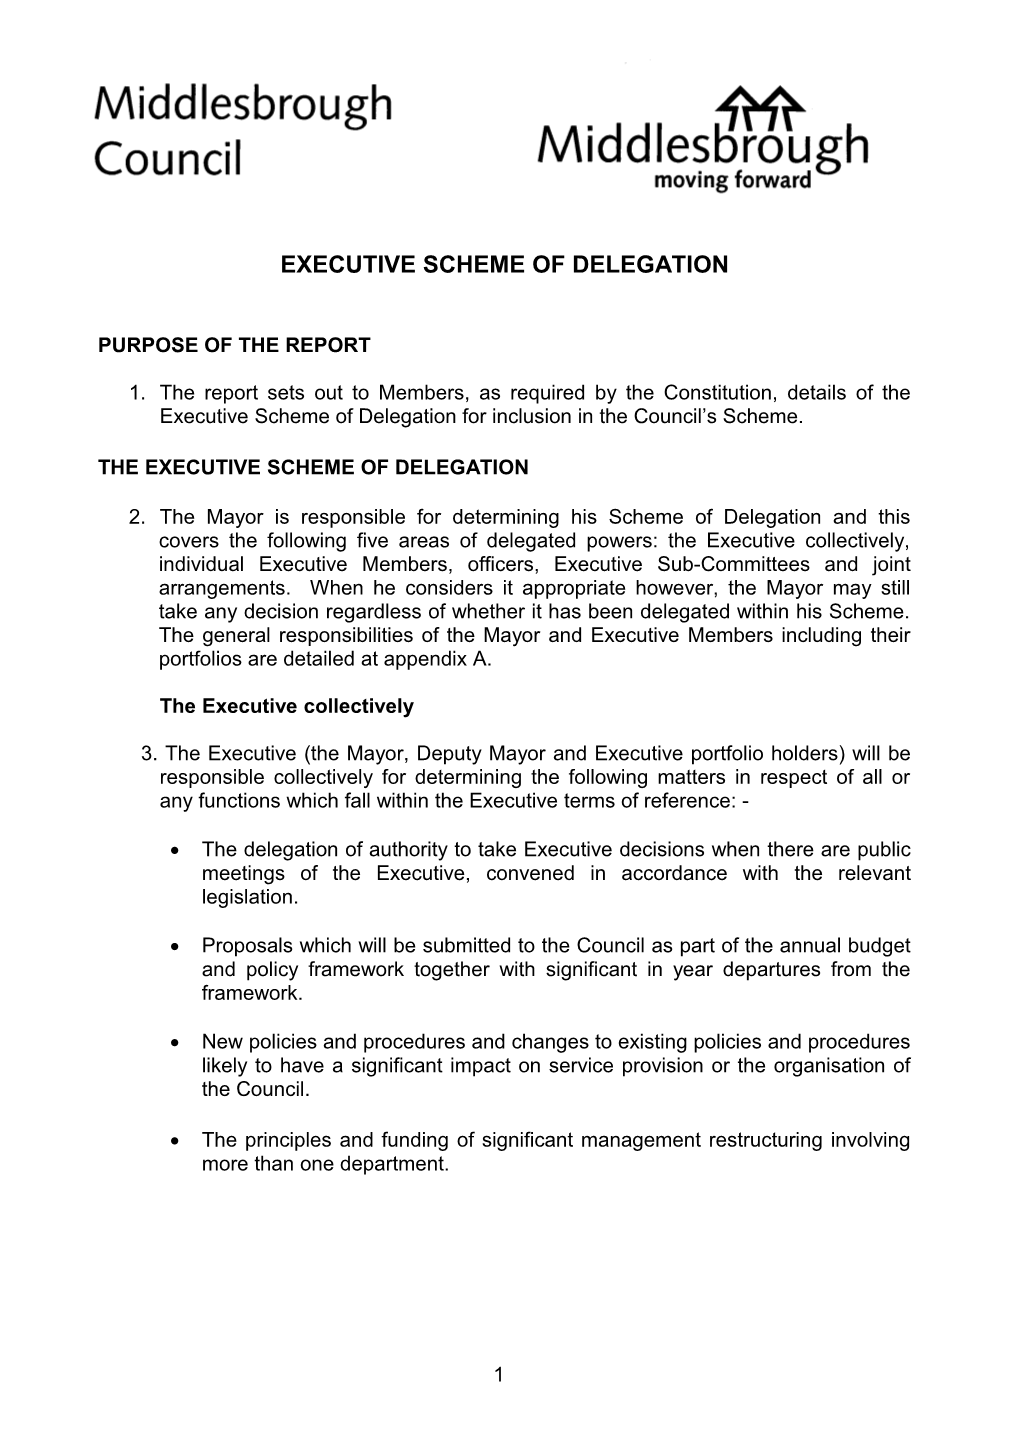 Executive Scheme of Delegation